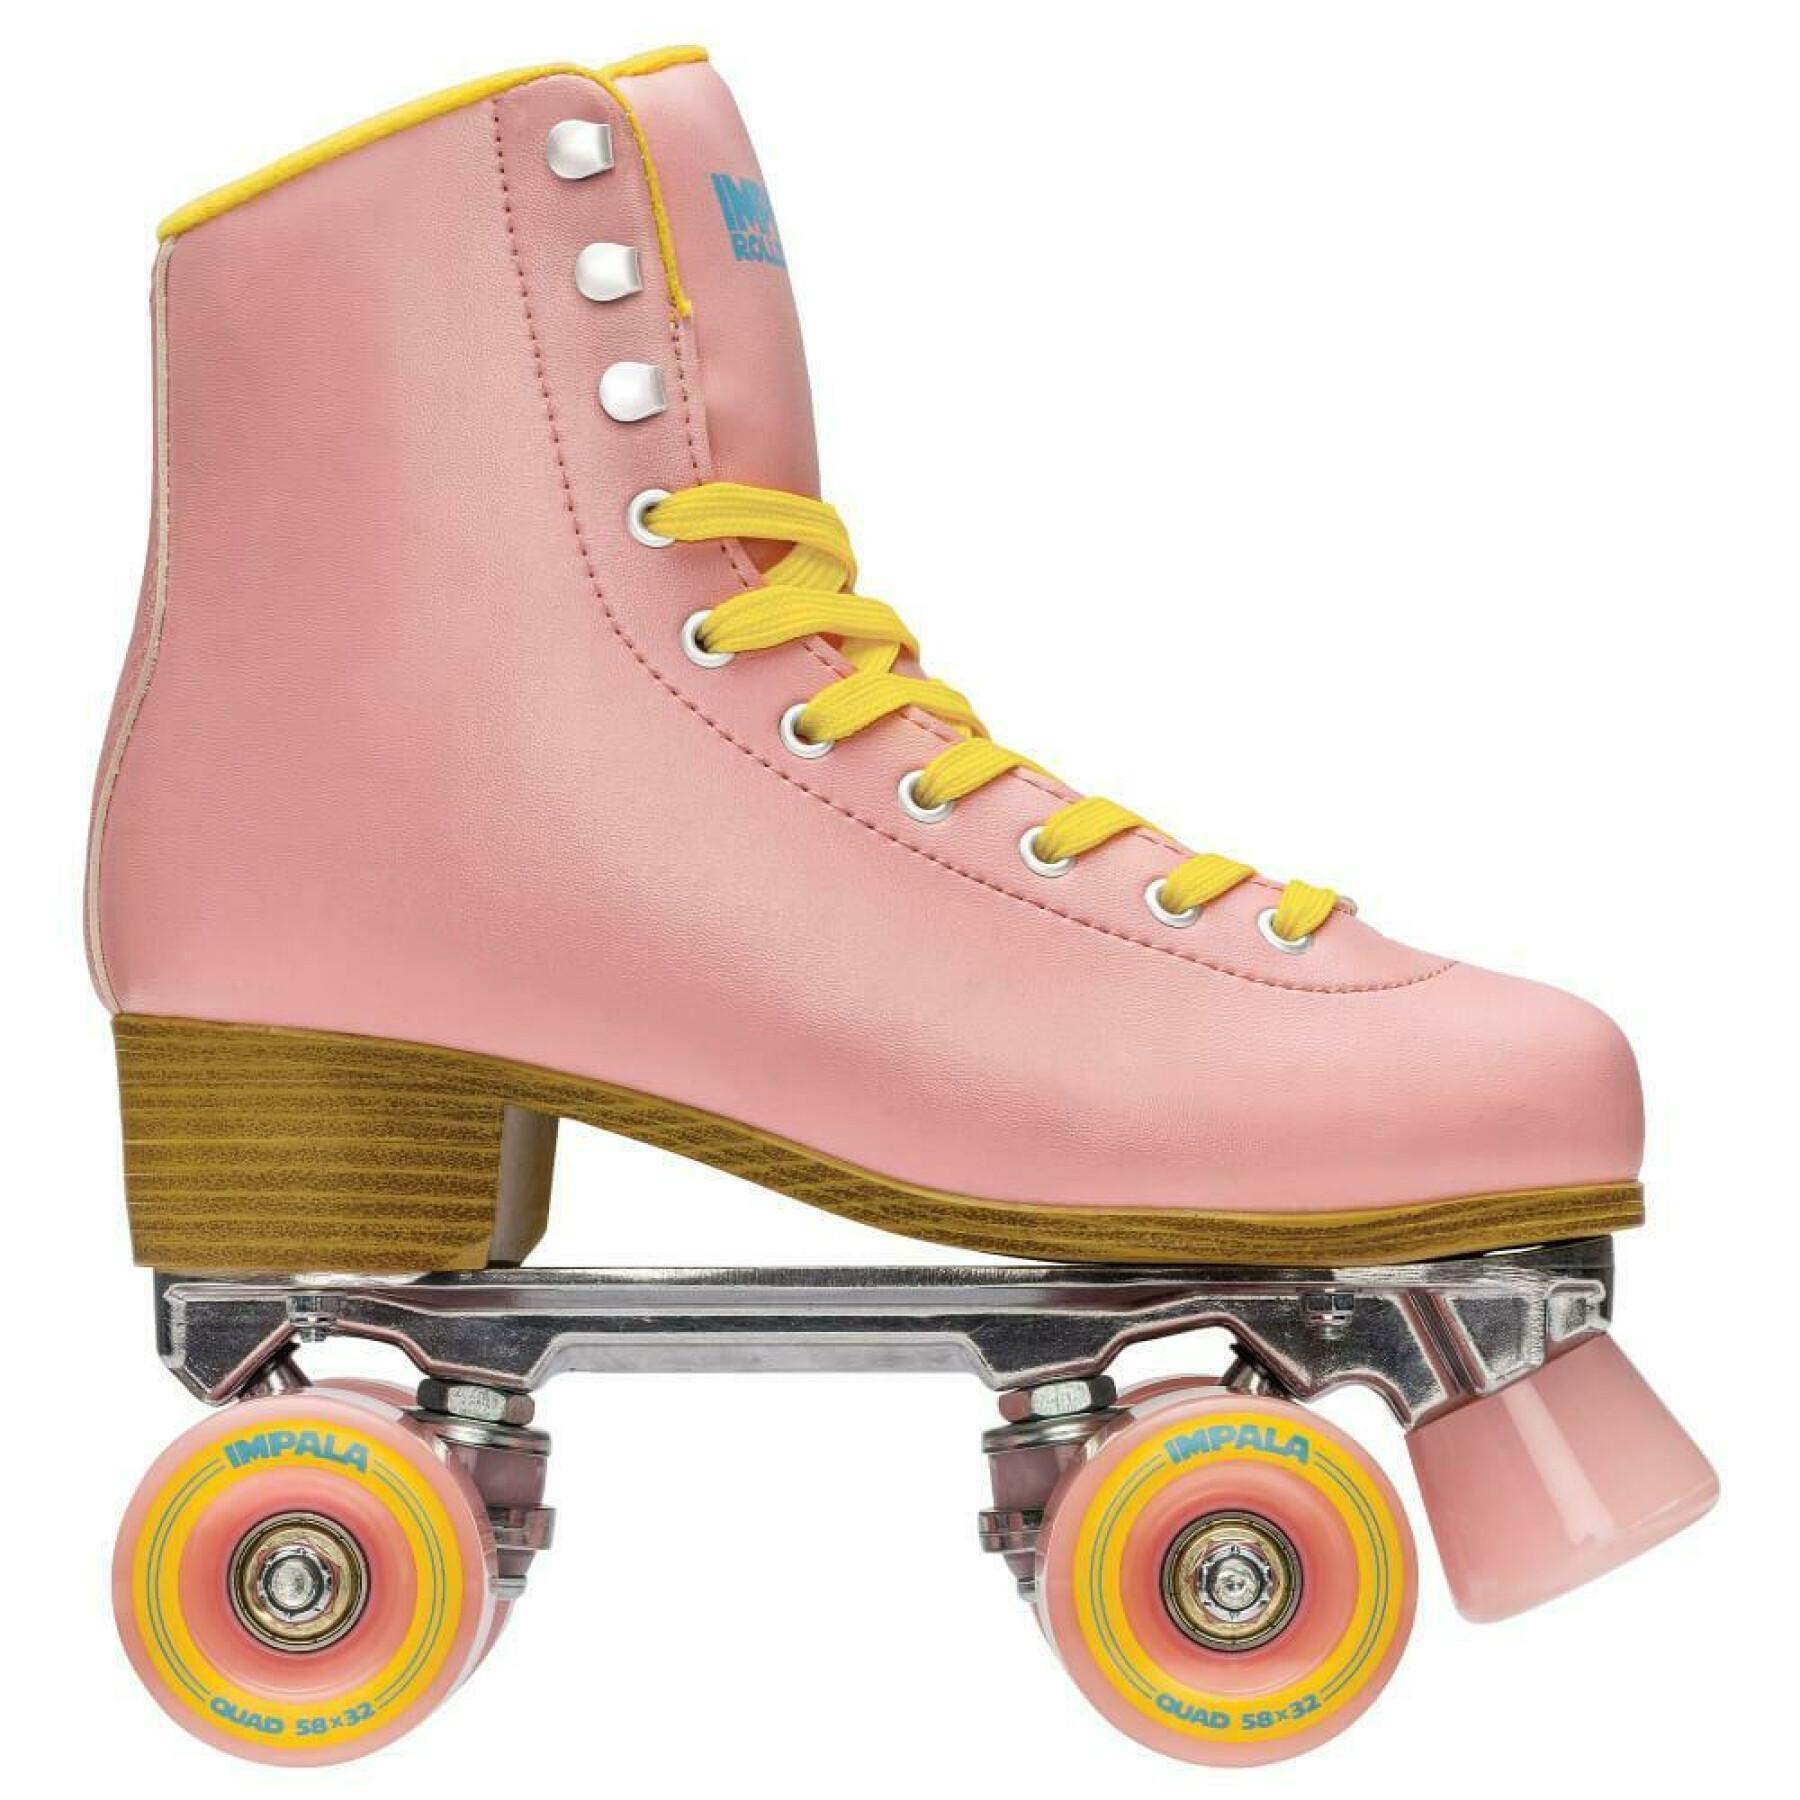 Women's shoes Impala Quad Skate